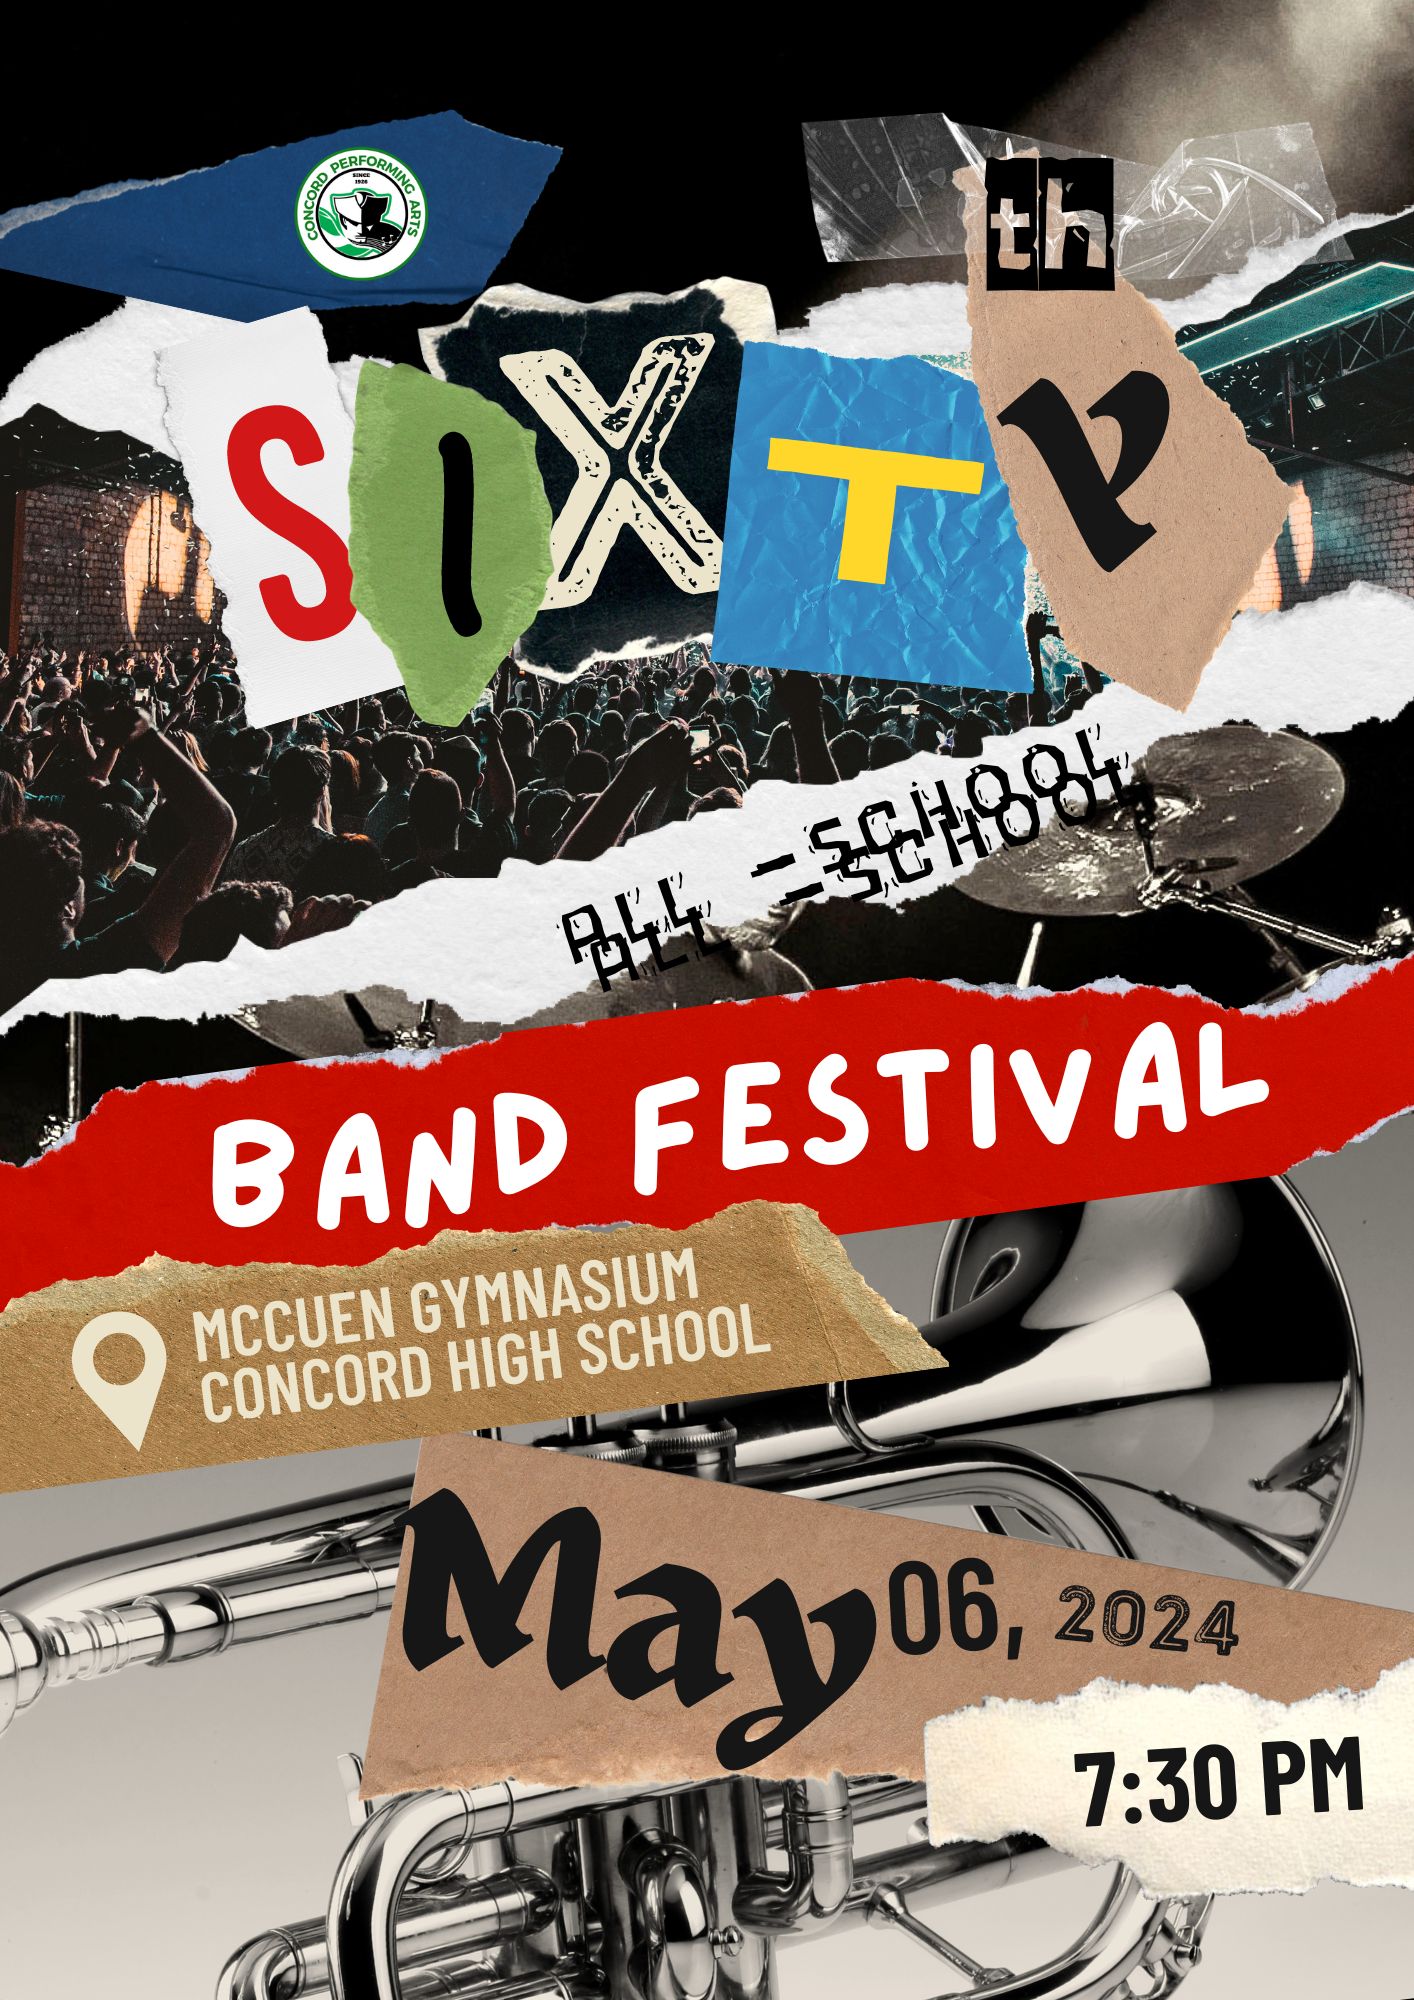 Band Festival - Monday, May 6